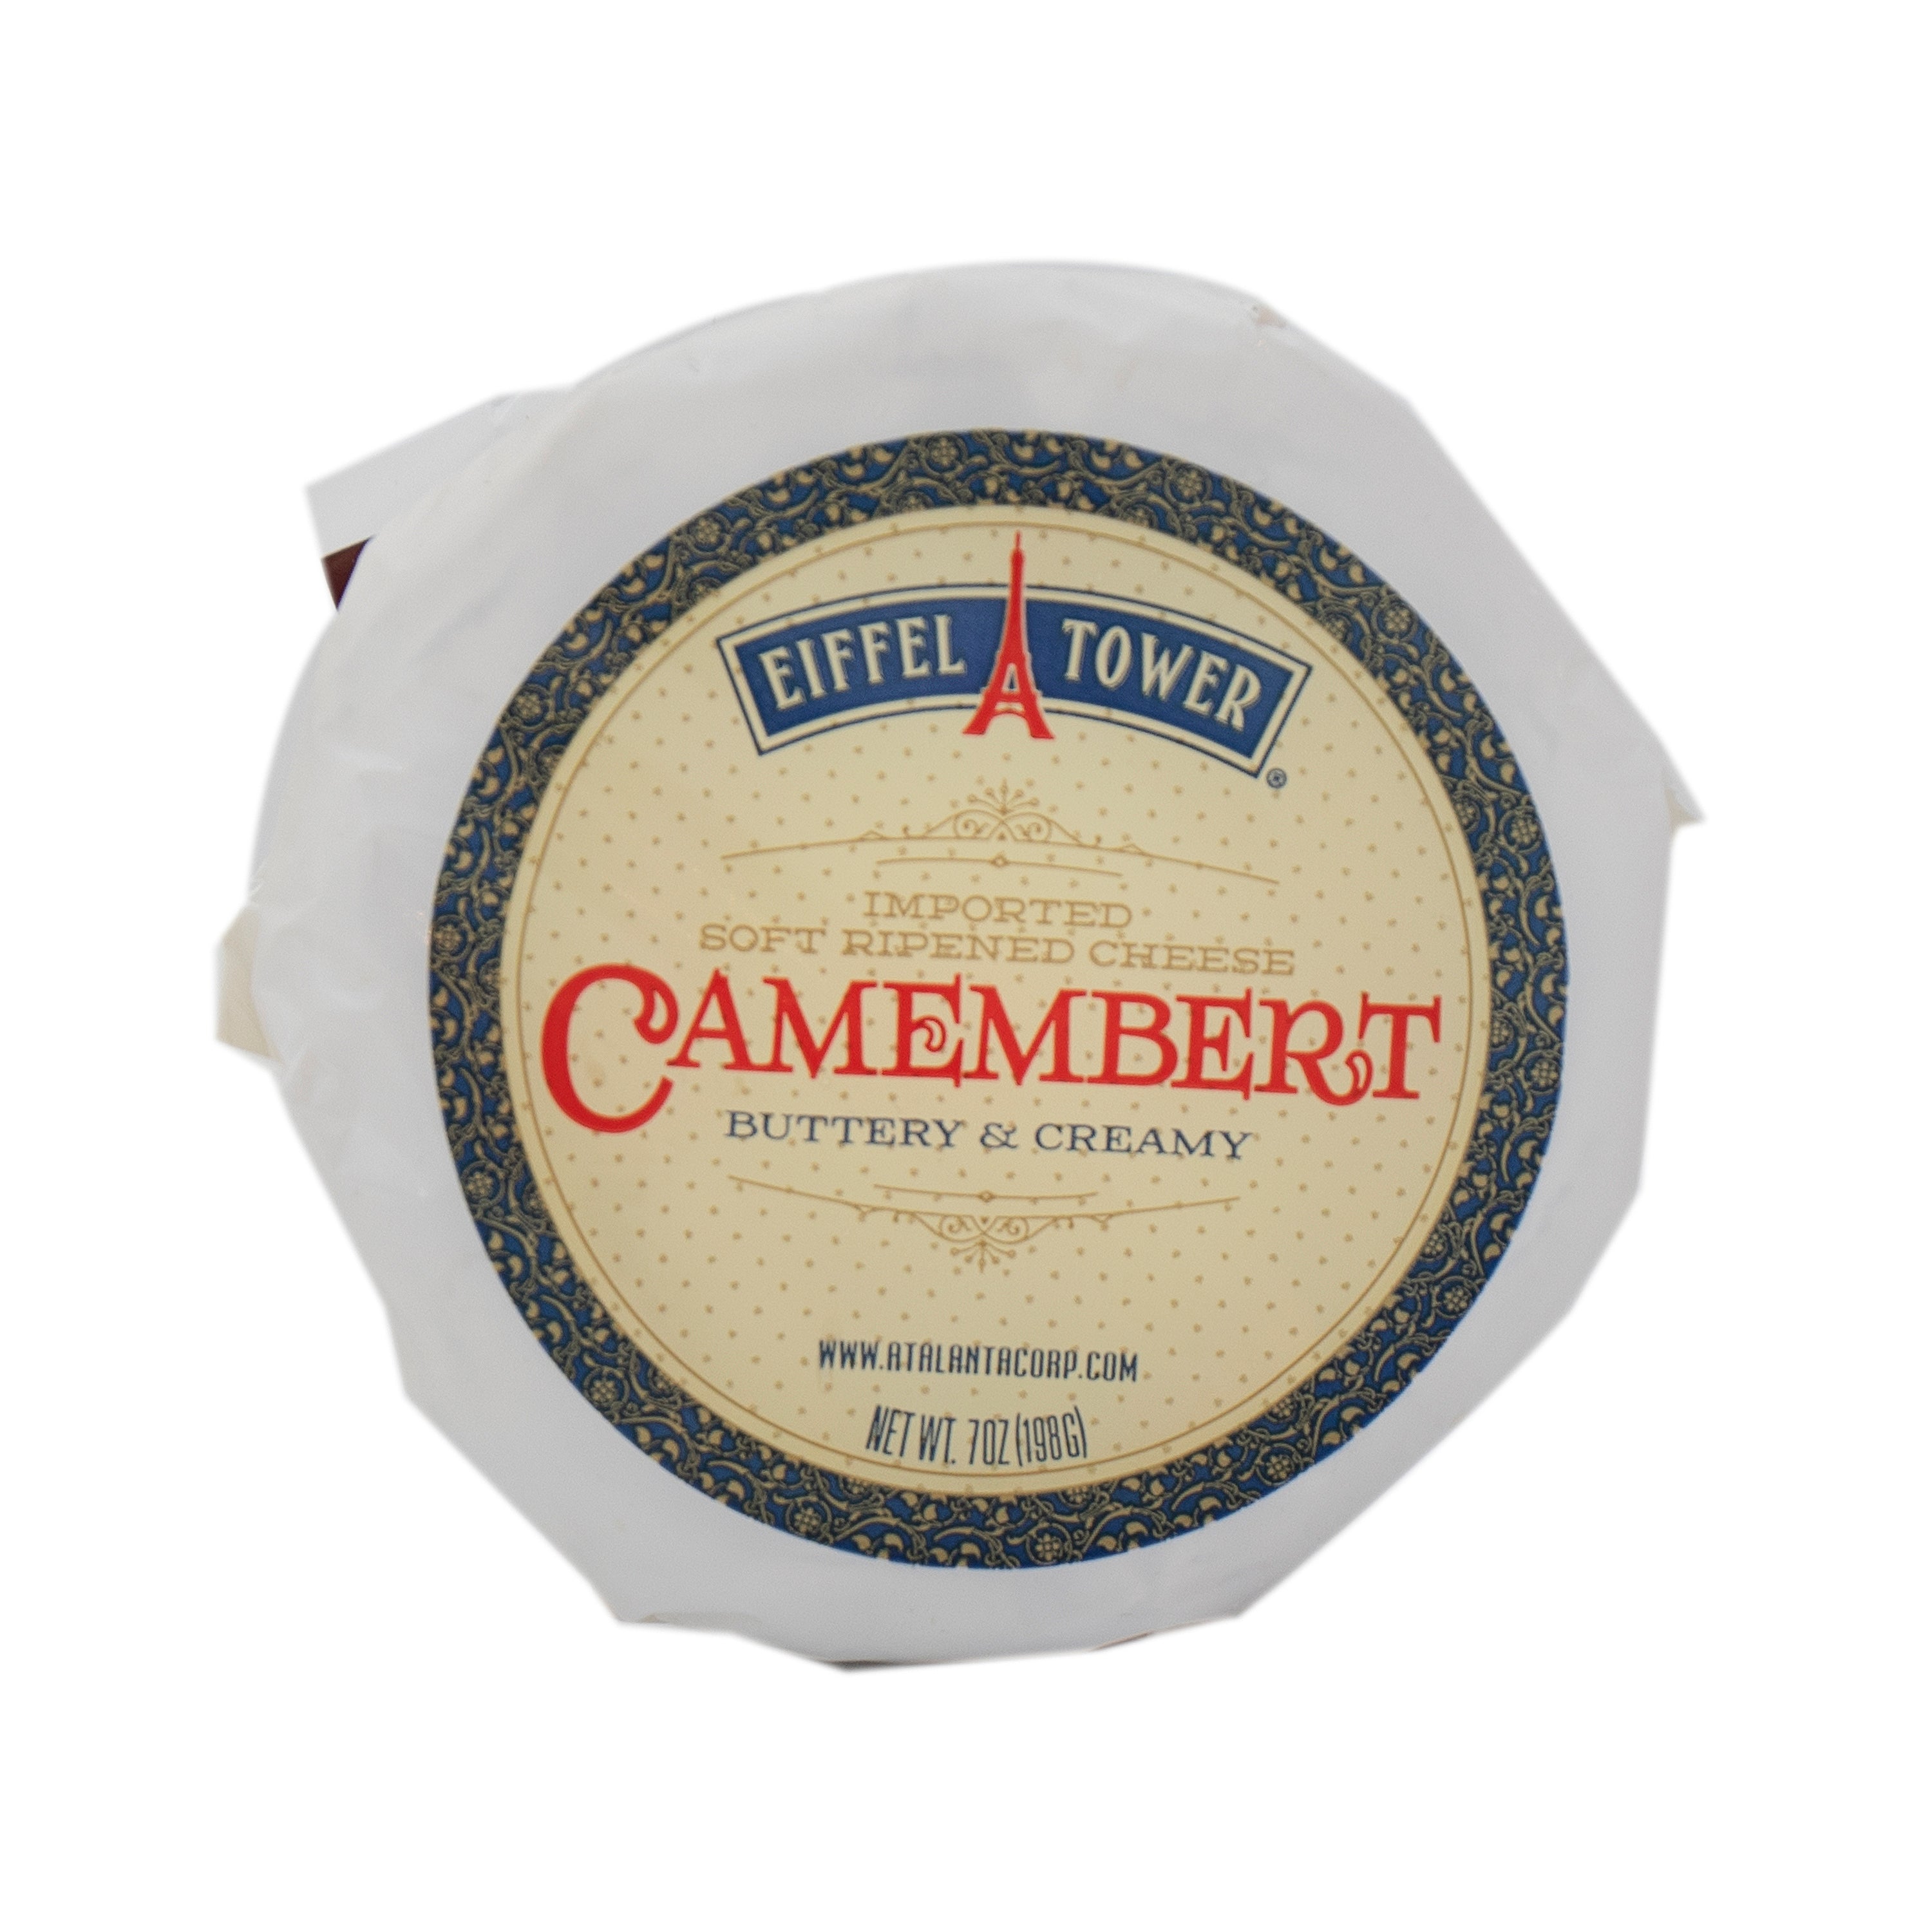 Eiffel Tower Camembert Cheese 7oz